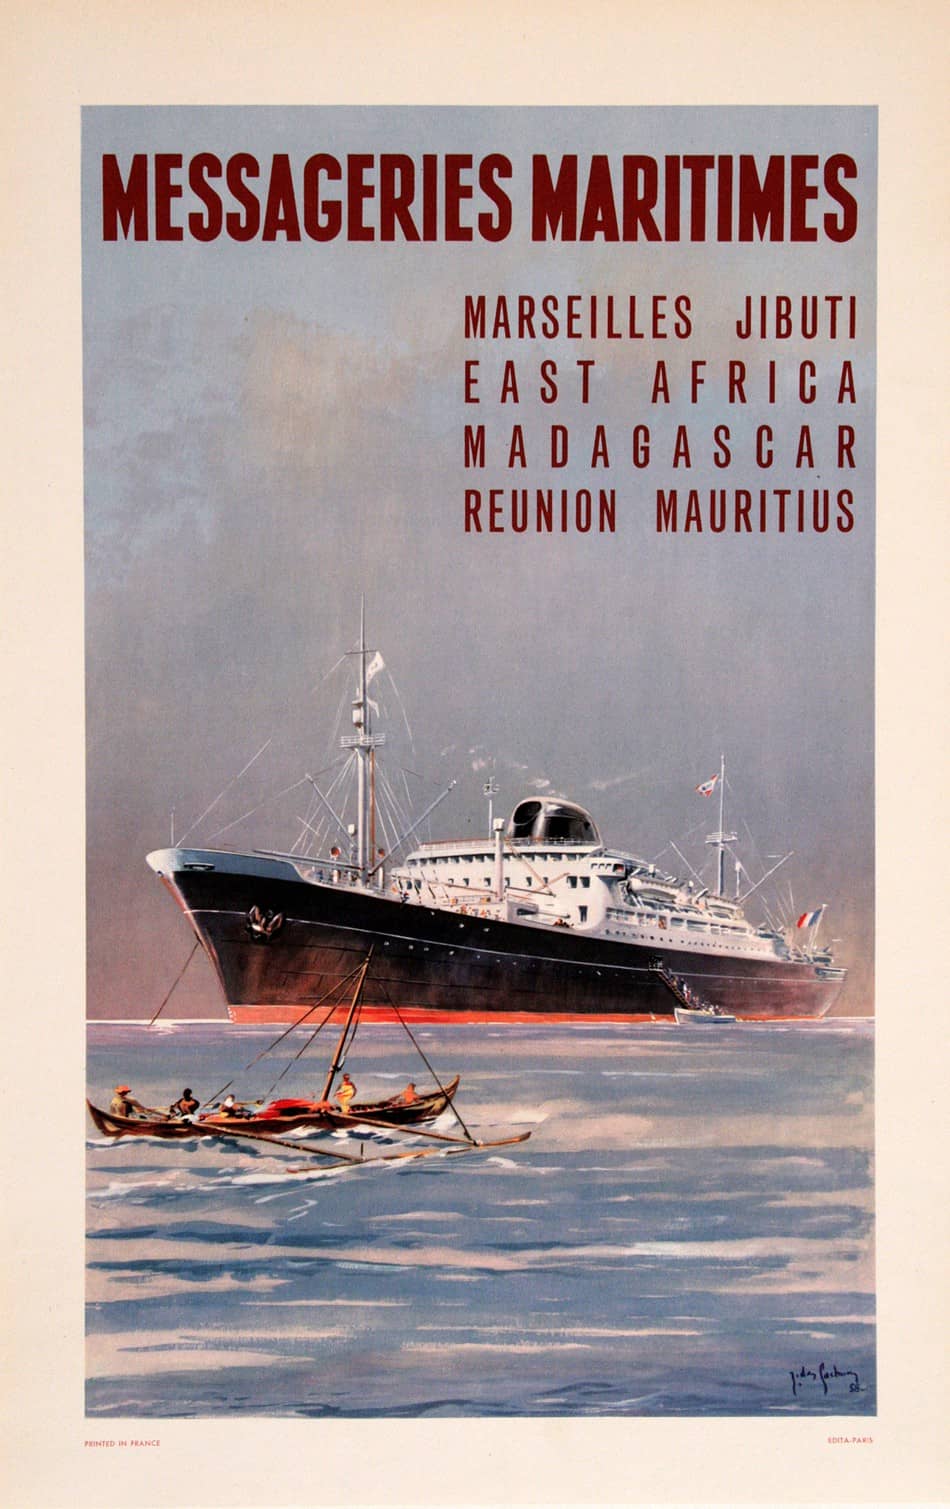 Original Vintage Messageries Maritimes Poster by Gachons - Marseilles Jibuti